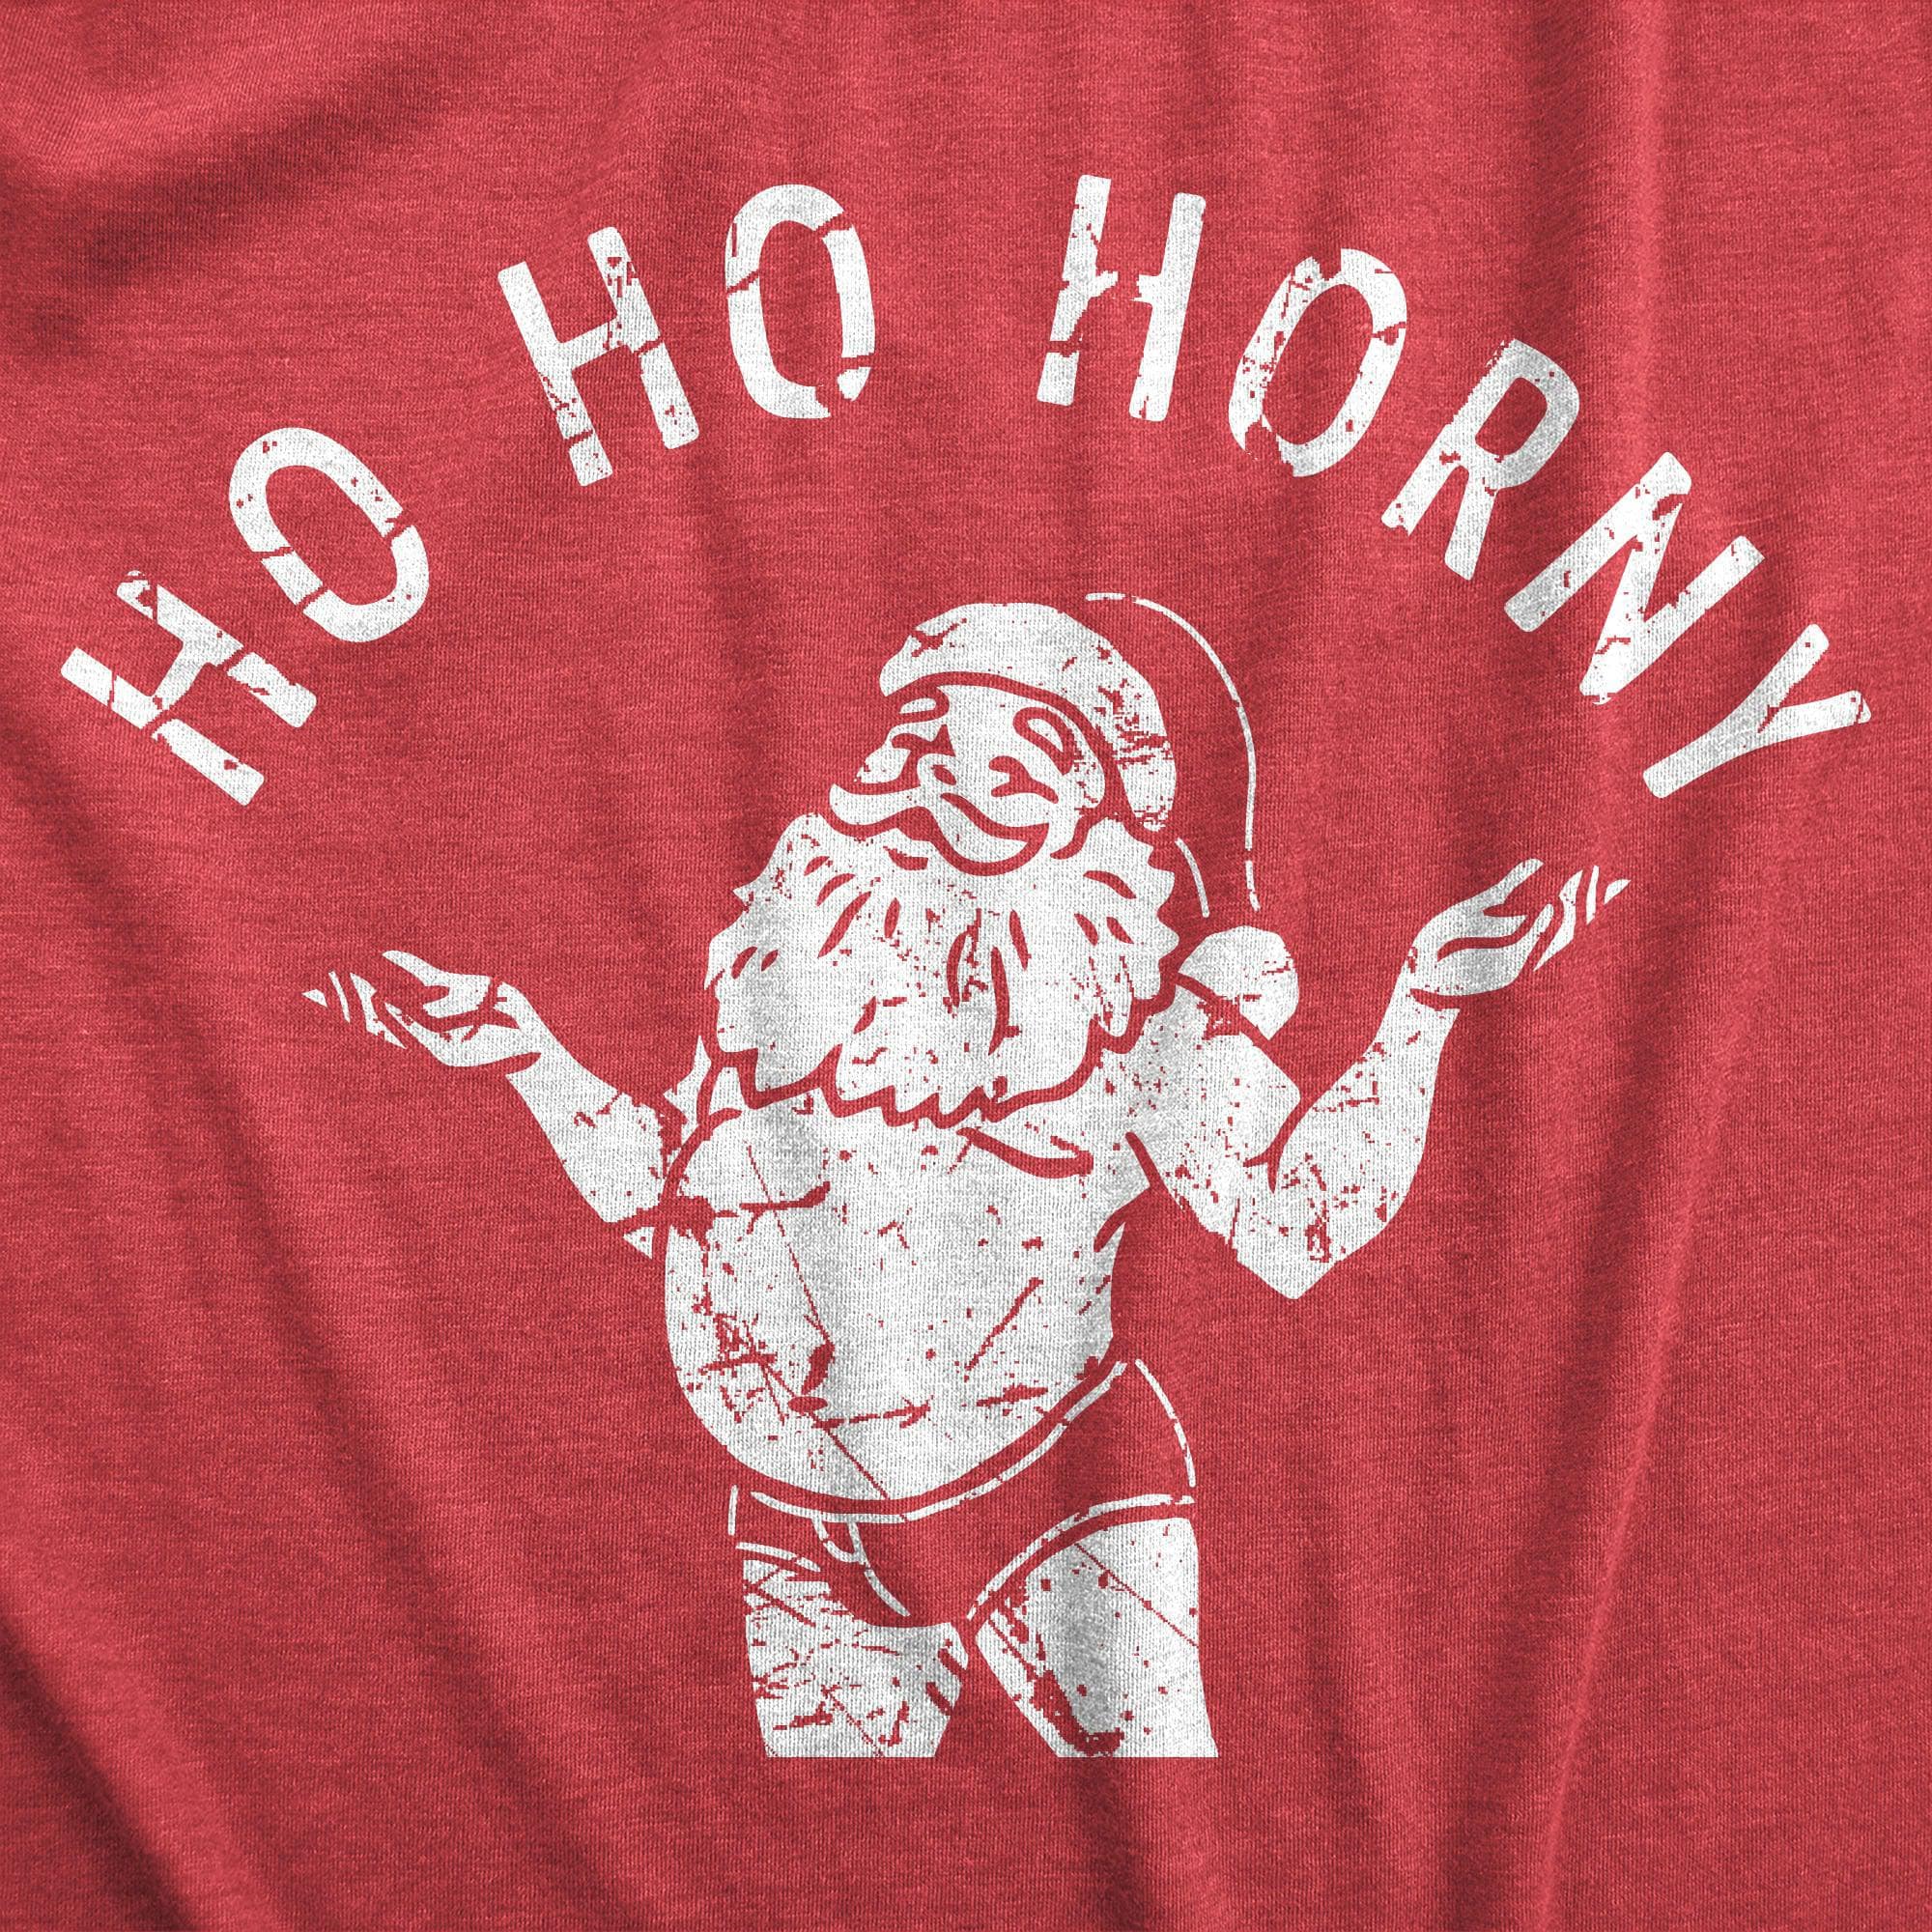 Ho Ho Horny Men's Tshirt  -  Crazy Dog T-Shirts